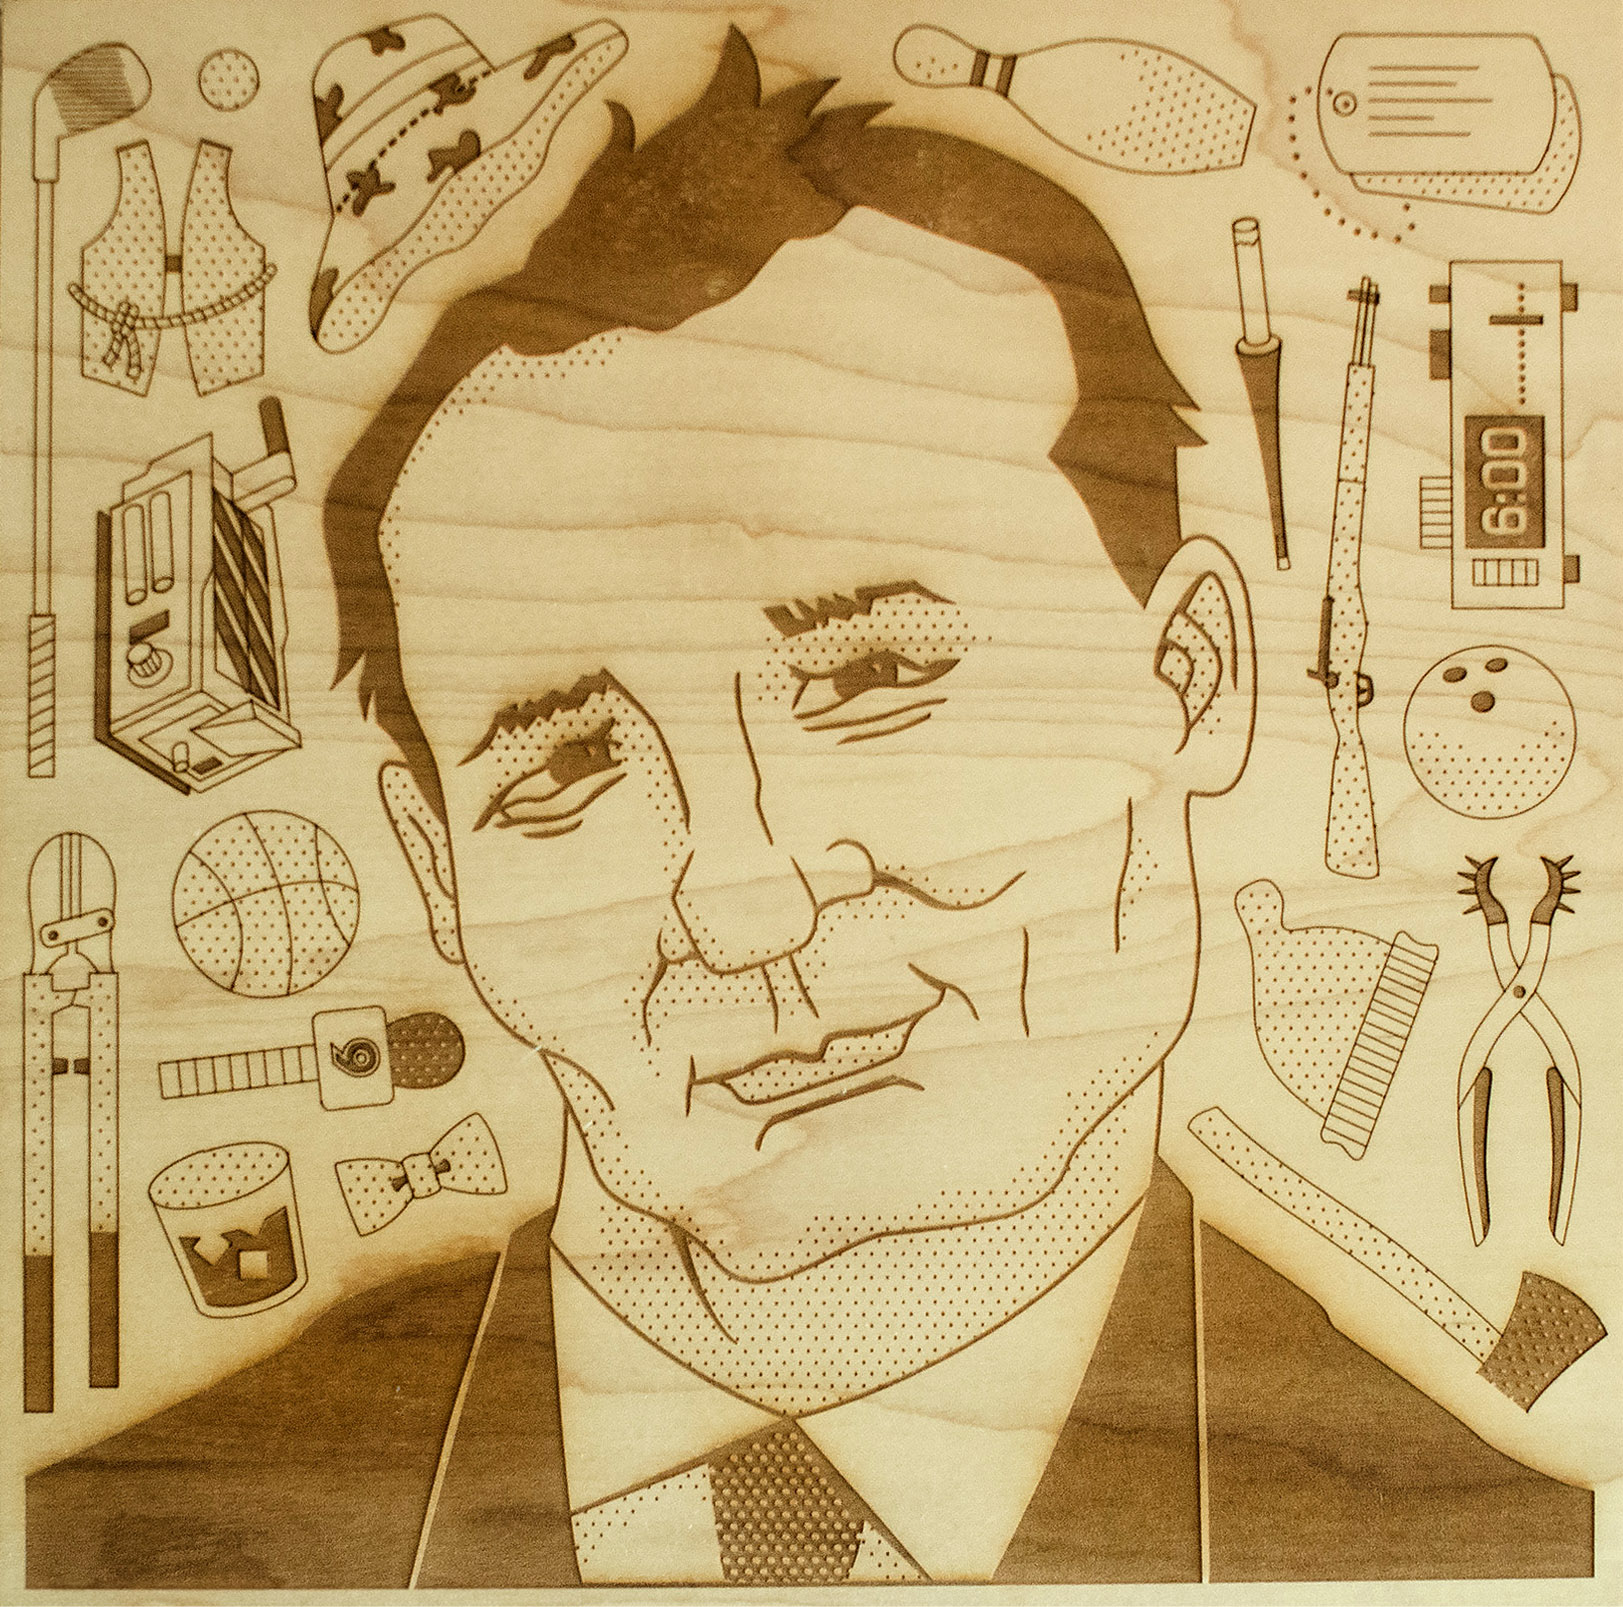 Bill Murray Portrait